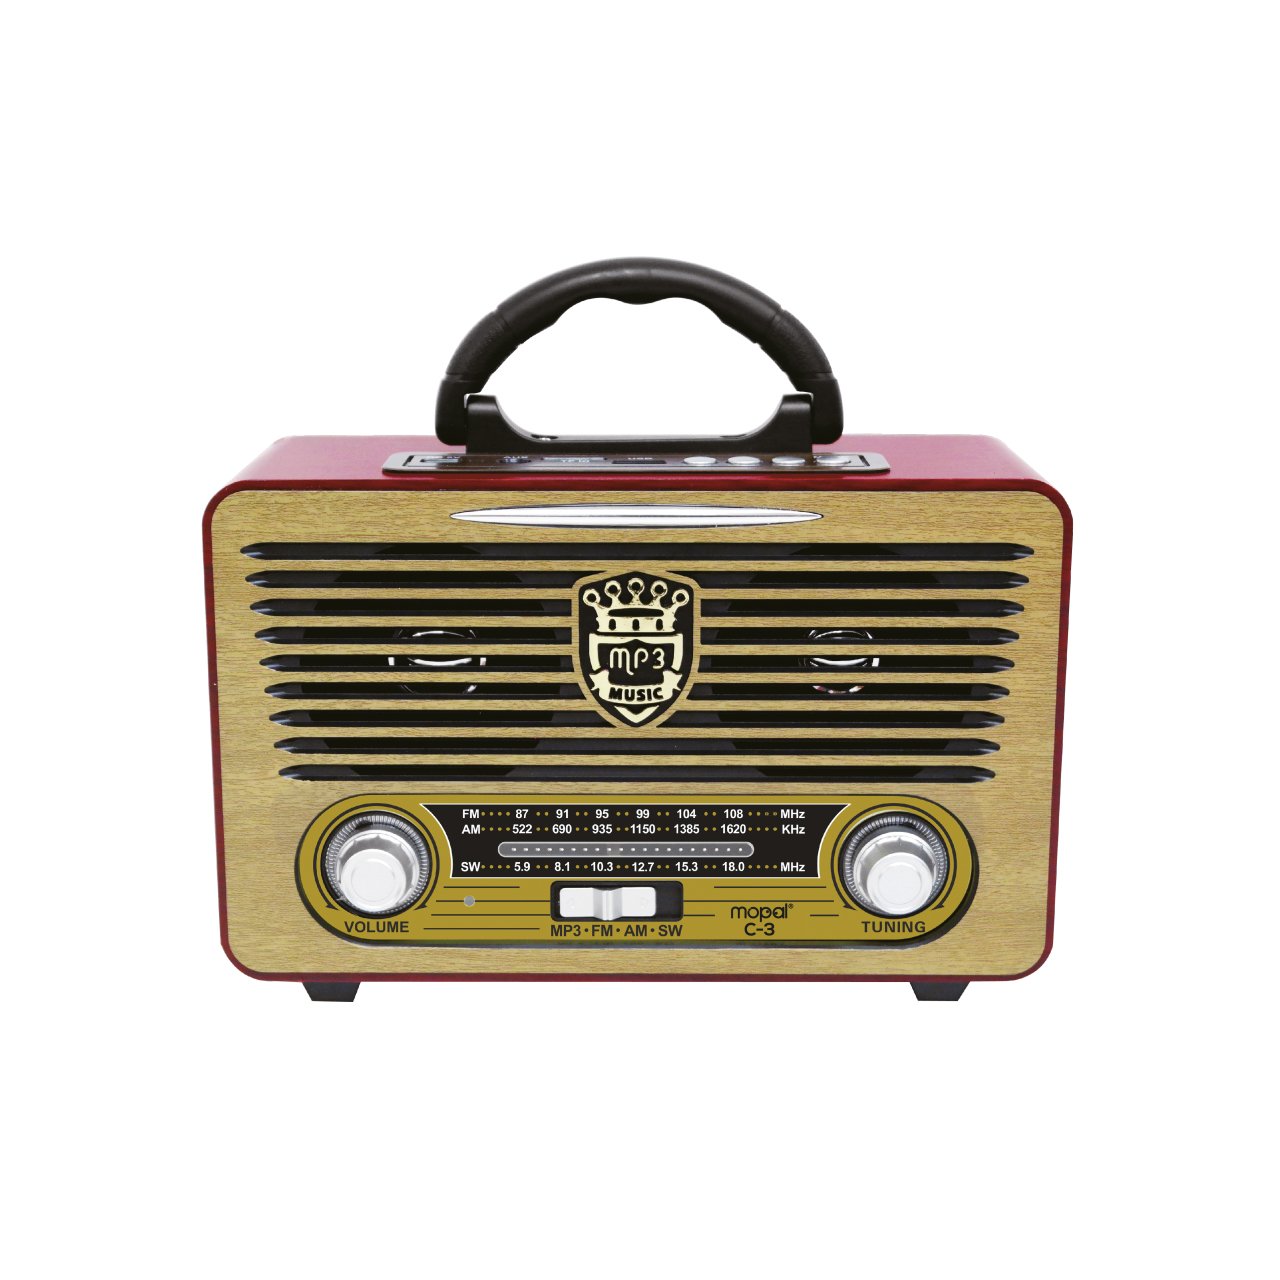 Mopal Classico C3 Vintage Nostalji Bluetooth Radyo Sarı